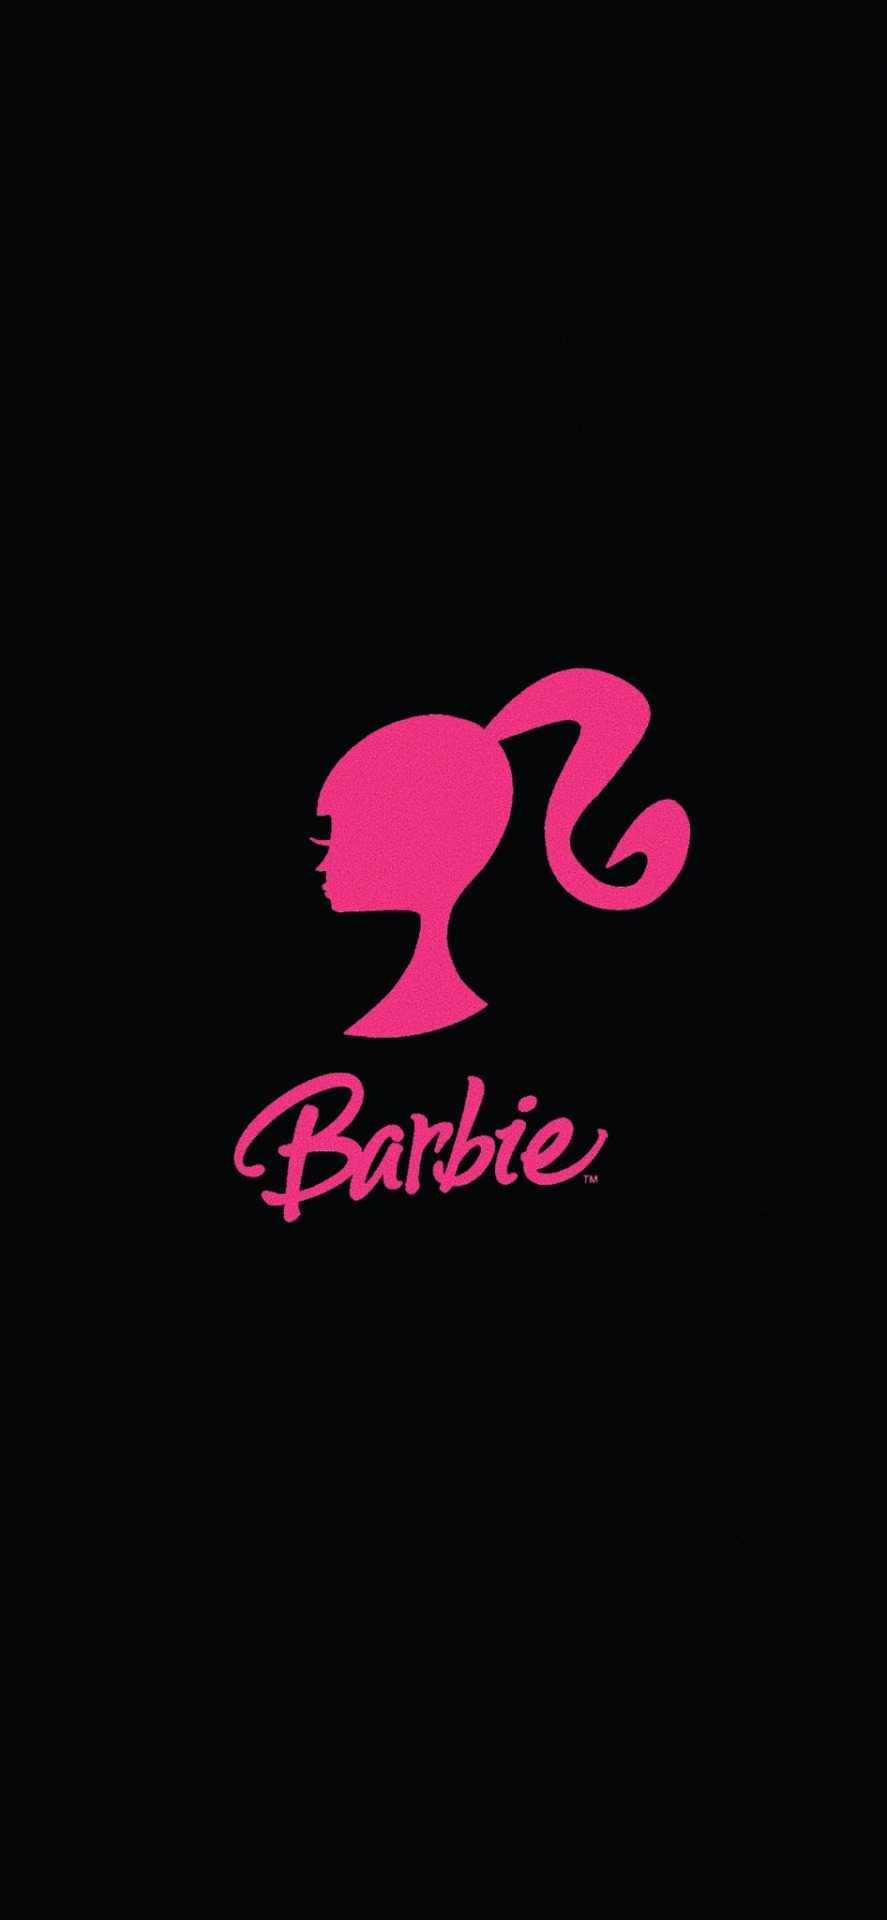 100+] Barbie Wallpapers | Wallpapers.com